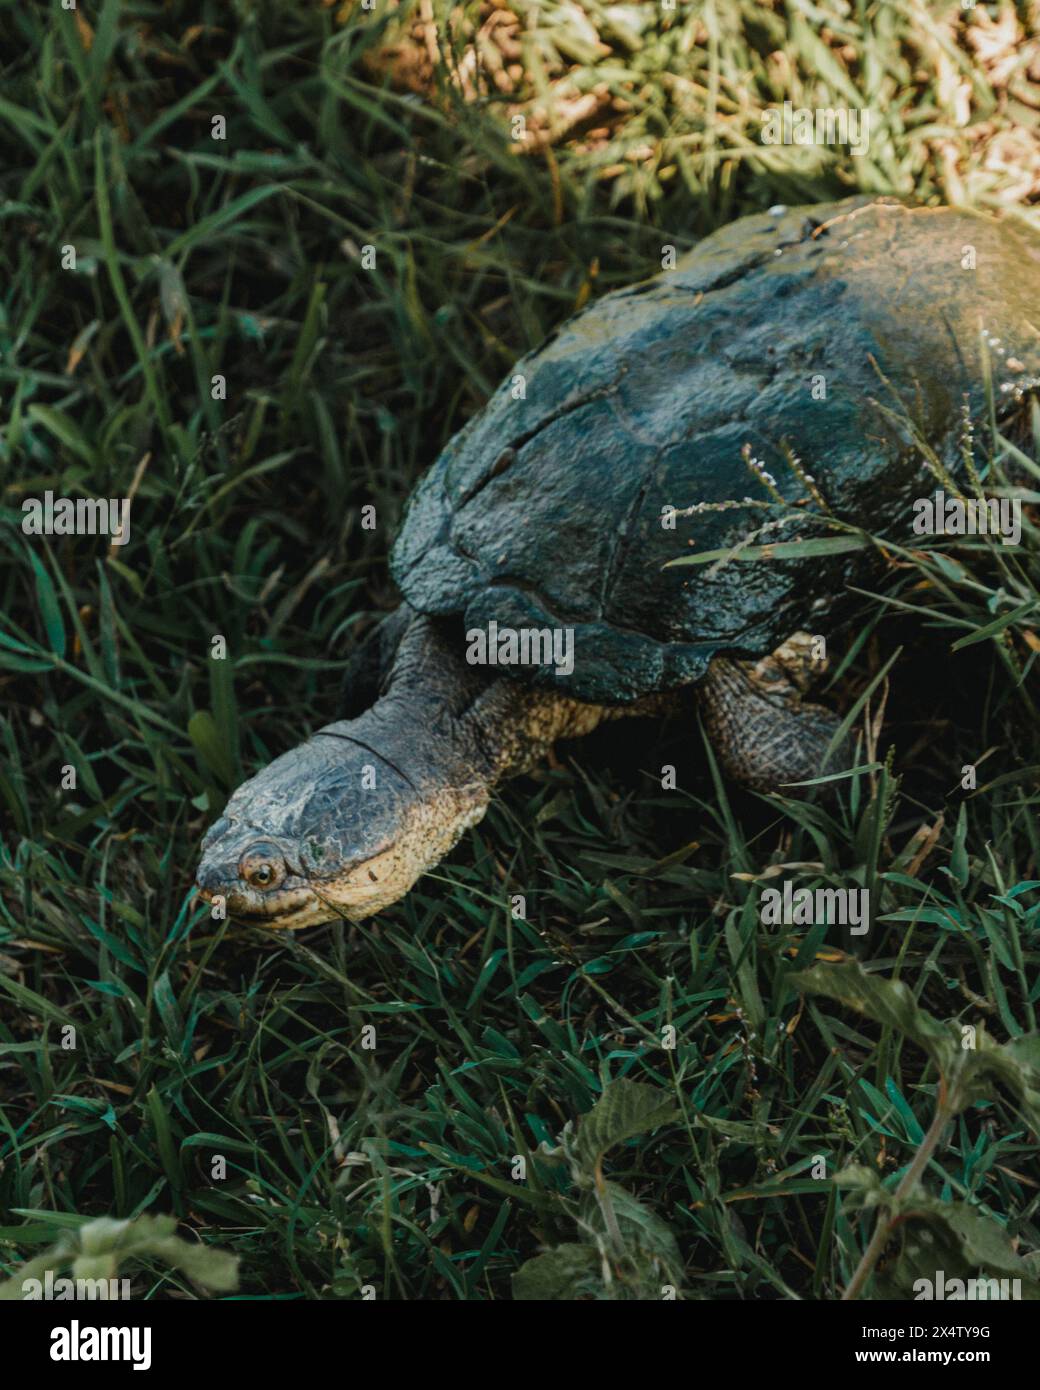 Snapping turtle advances through grassy terrain Stock Photo